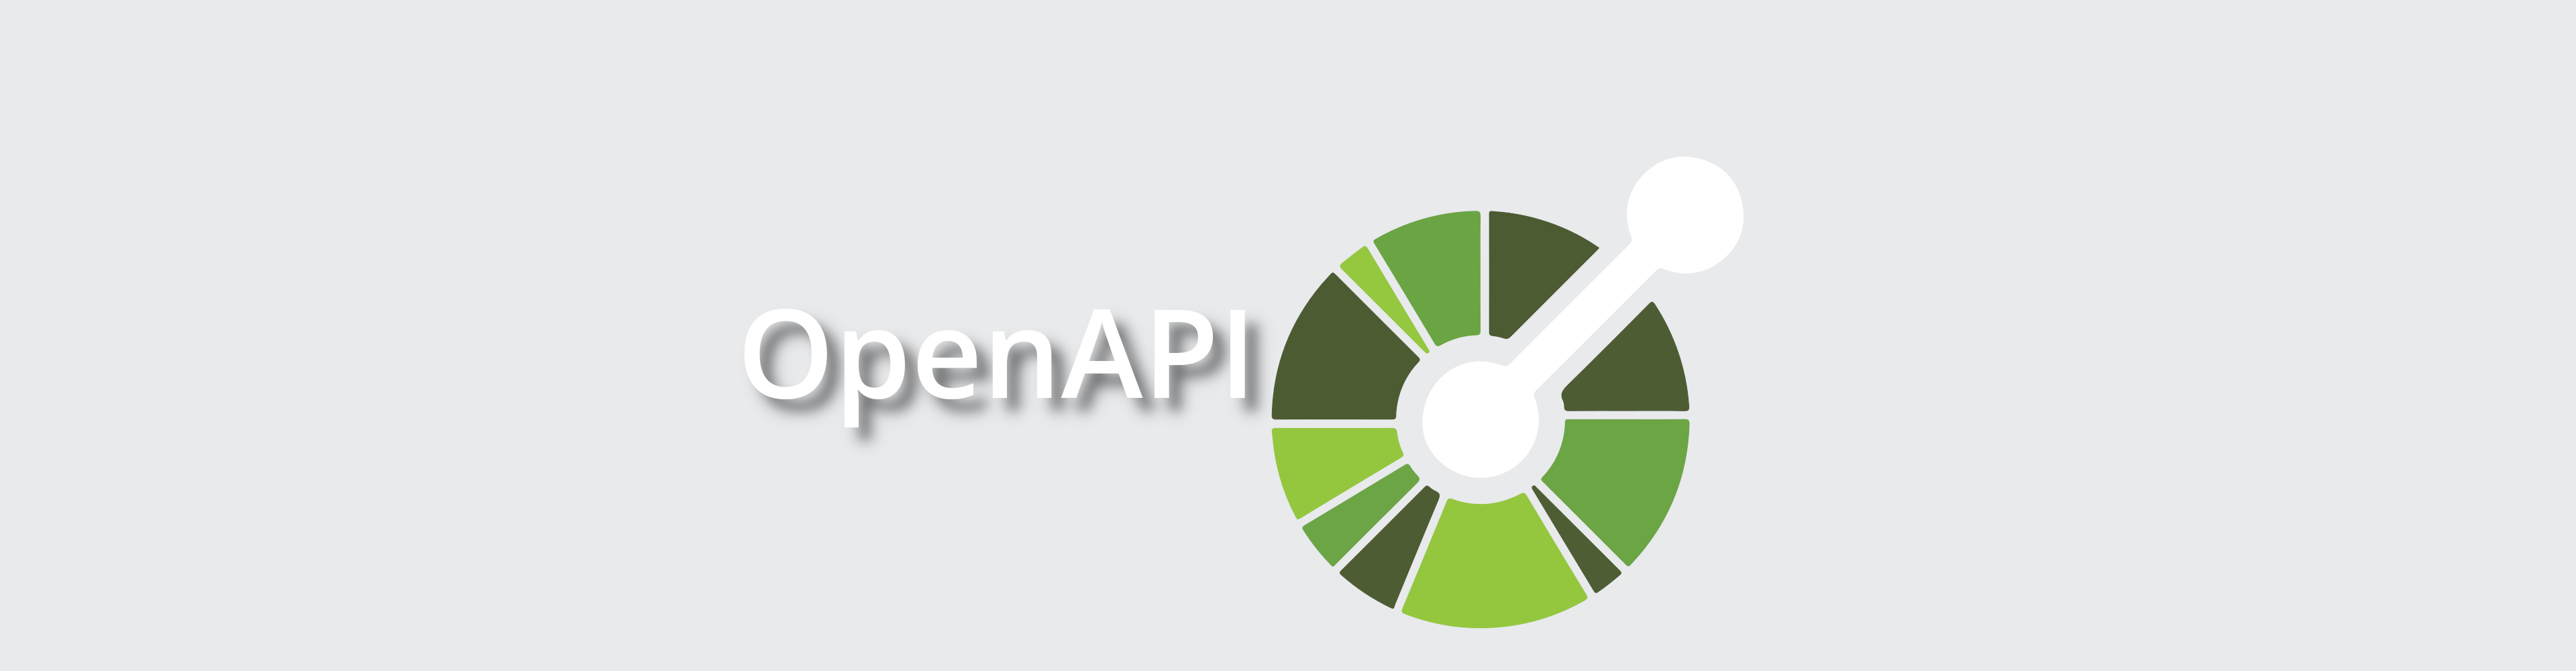 OpenAPI with logo